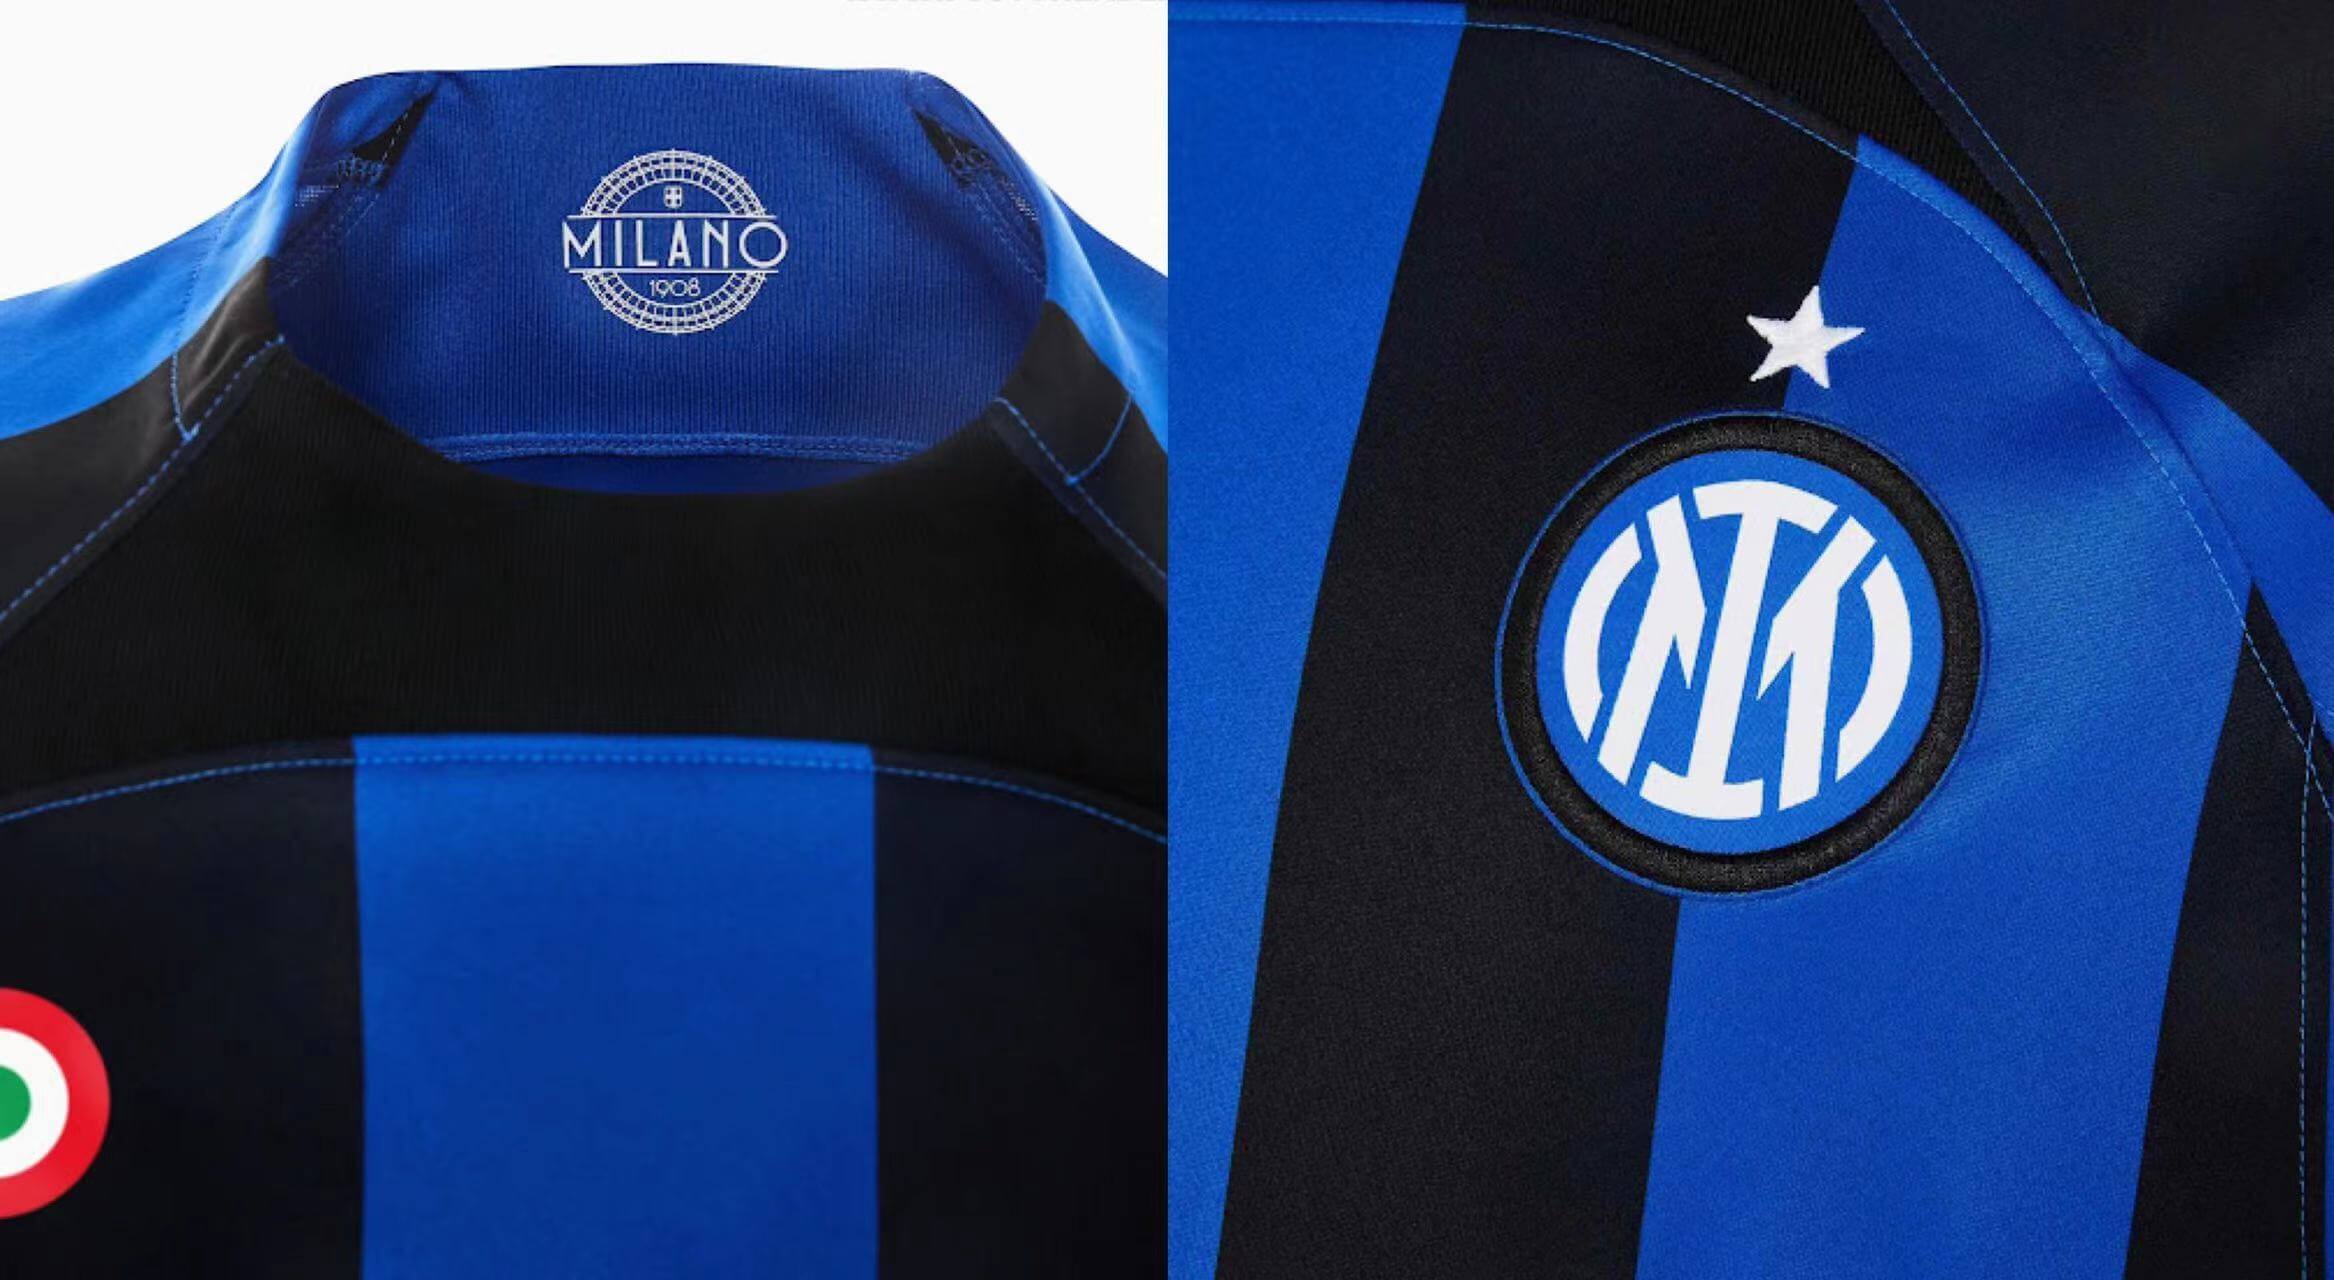 22/23 Inter home jersey